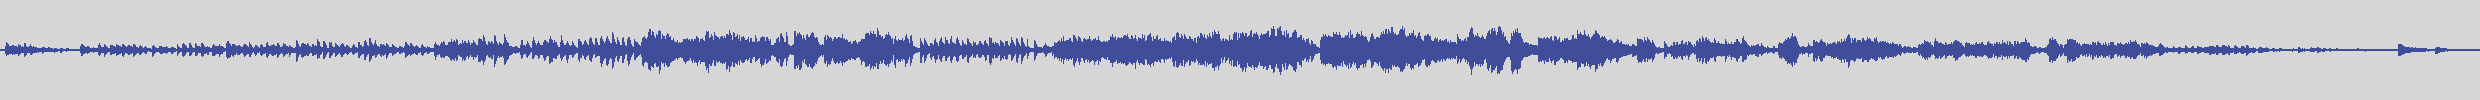 big_music_classic [BMC008] Frédéric Chopin - Impromptu Op. 51 [Original Version] audio wave form